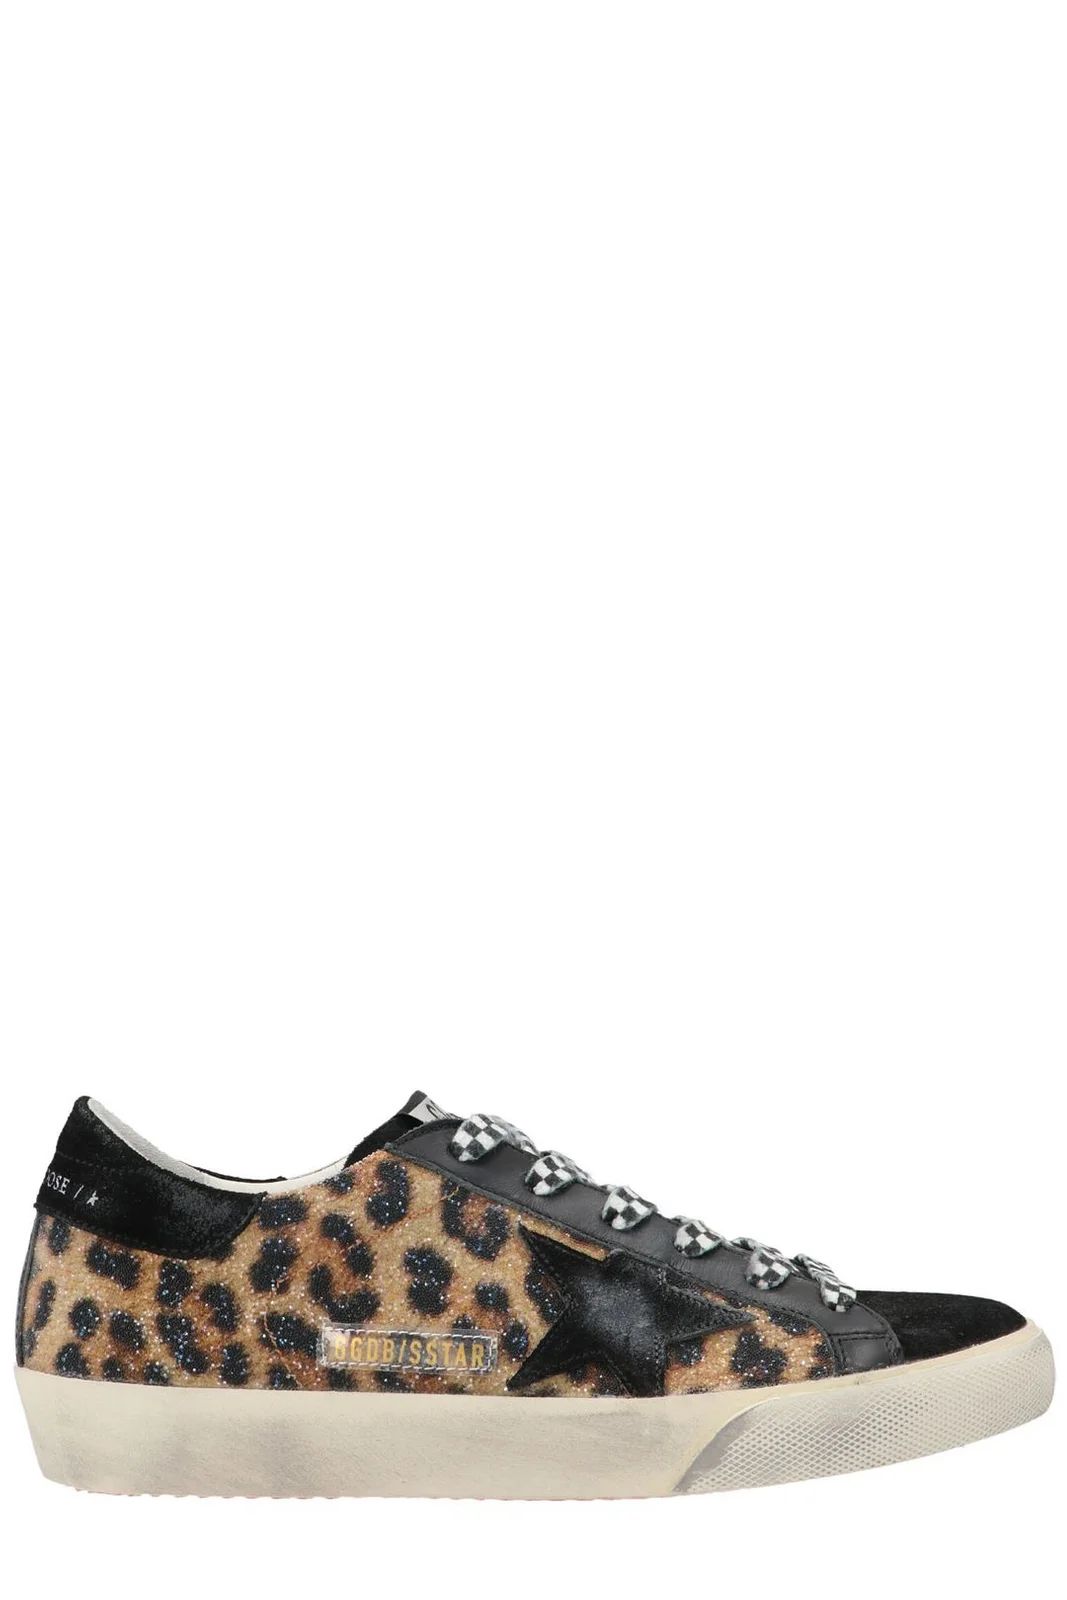 Golden Goose Deluxe Brand Leopard Printed Sneakers | Cettire Global